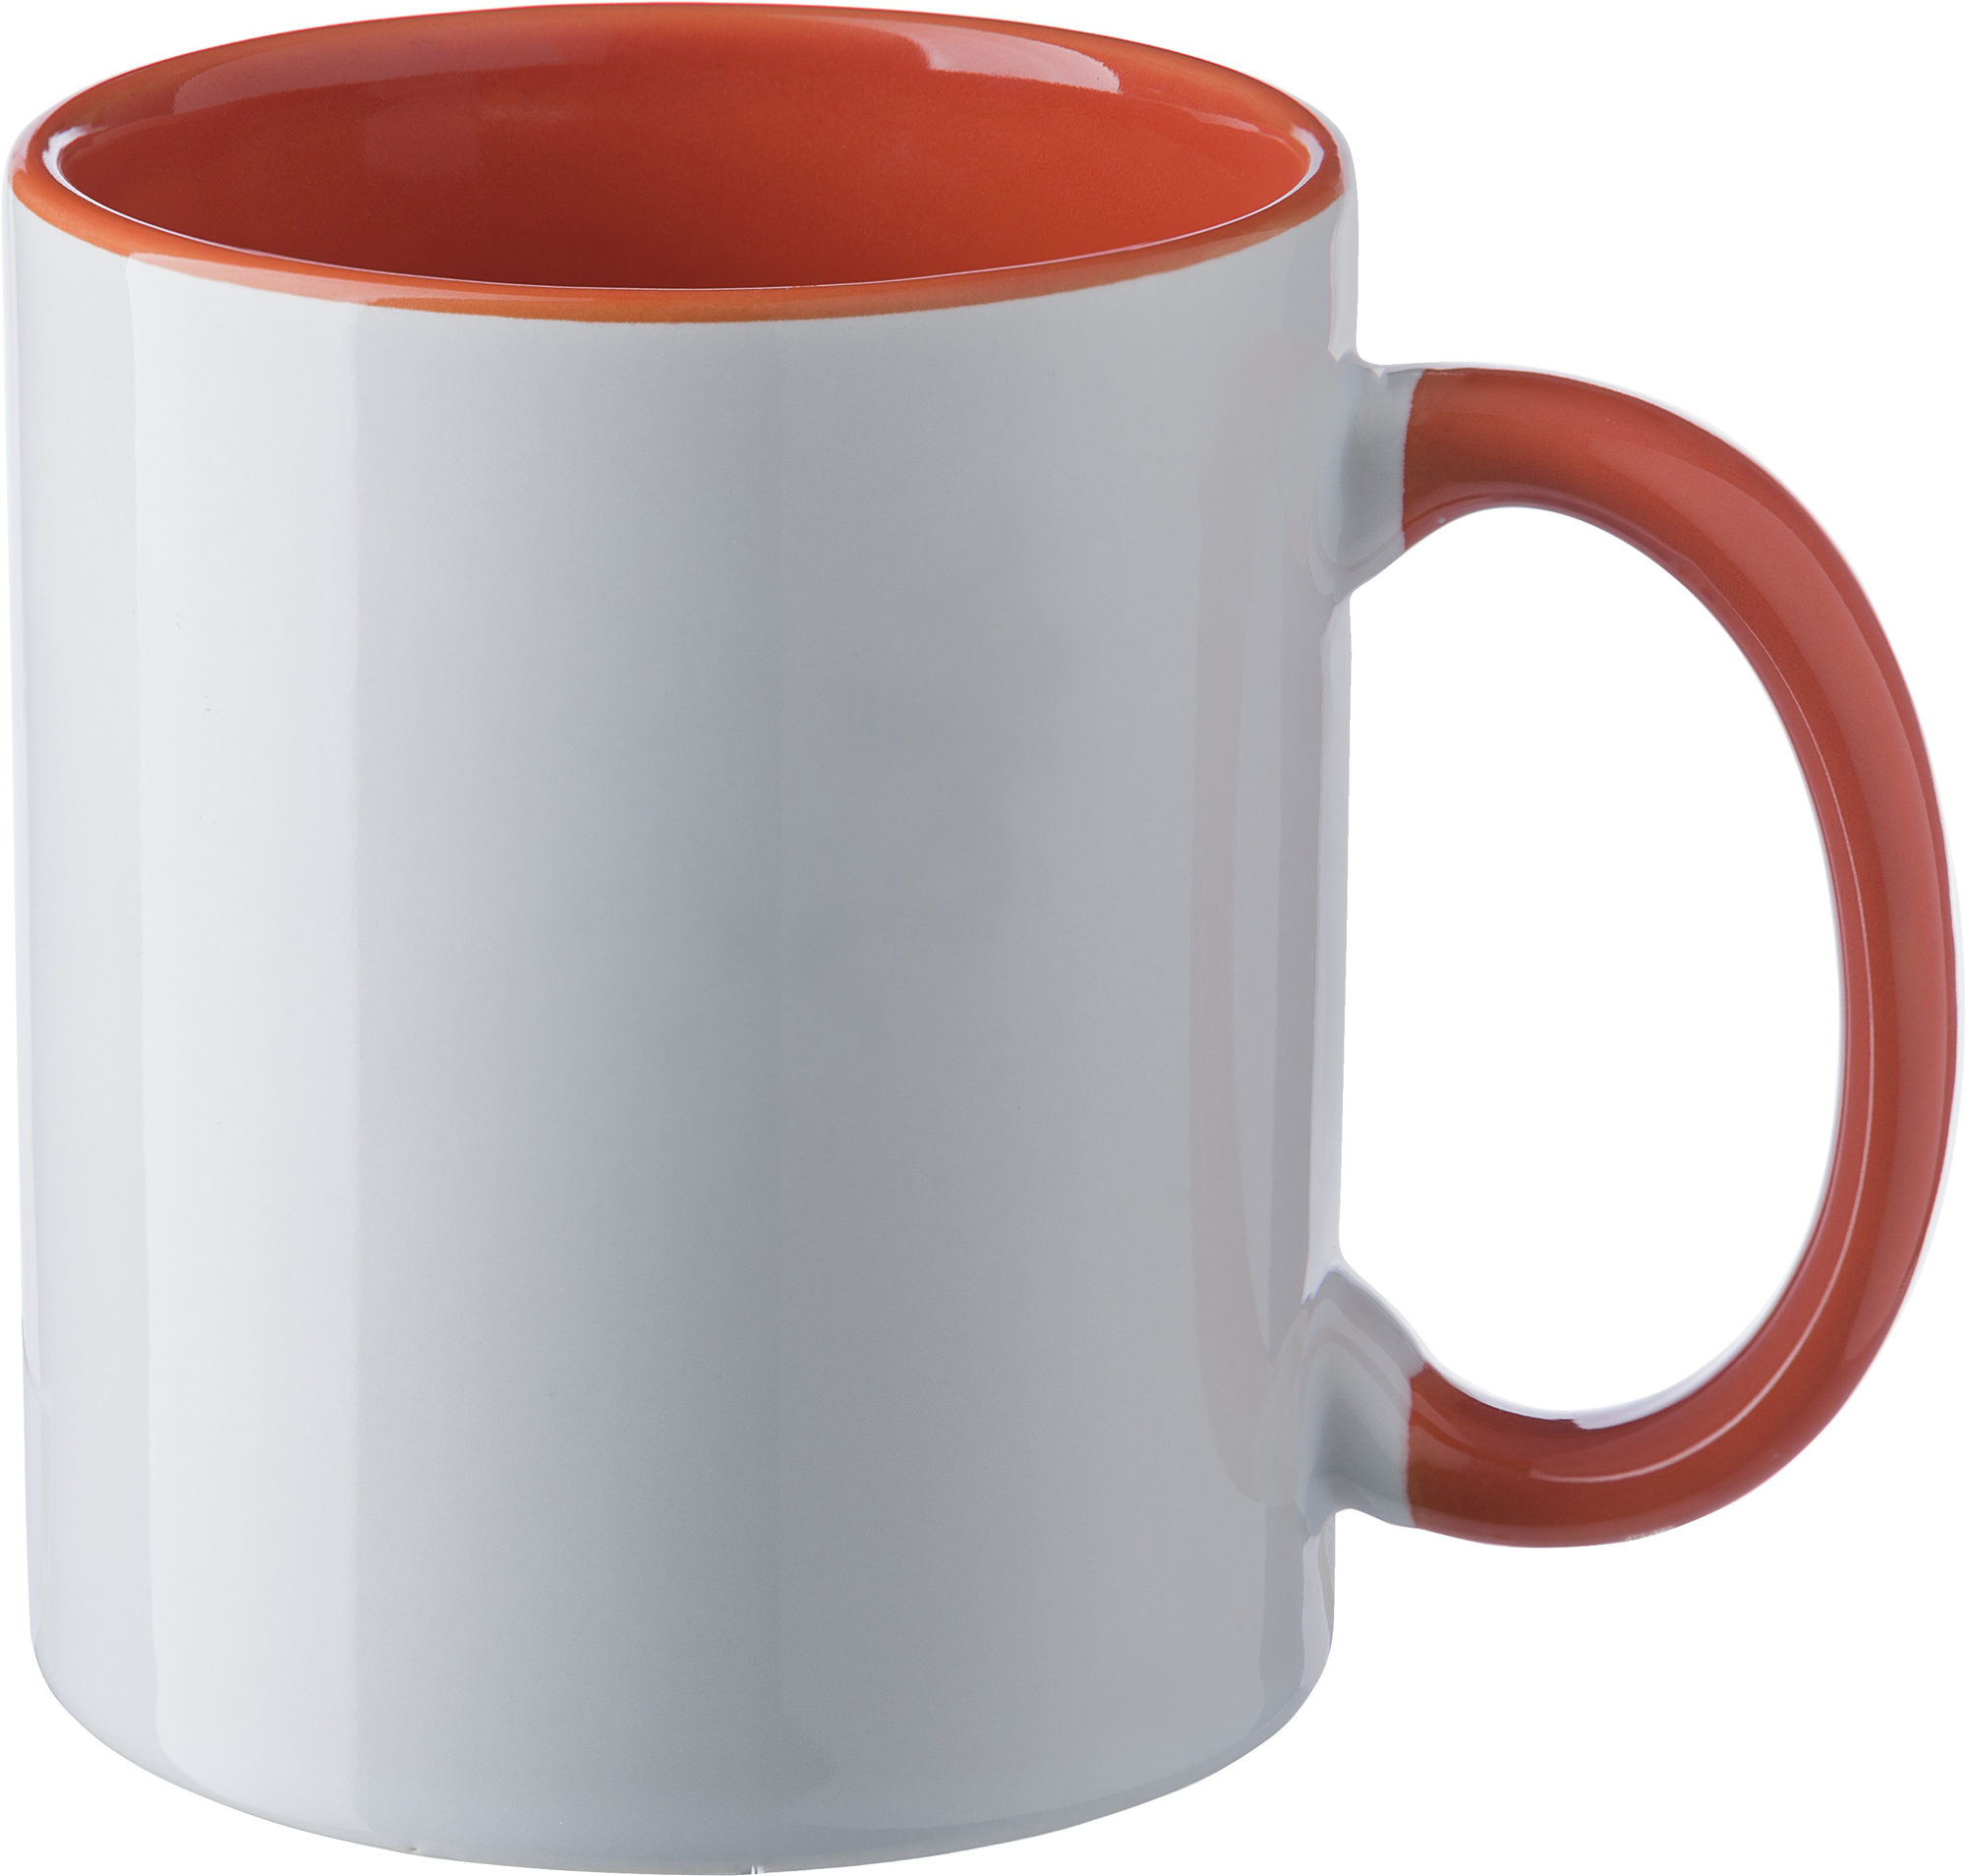 000000864564 007999999 3d045 rgt pro01 2022 fal - Ceramic and cork mug (420ml)